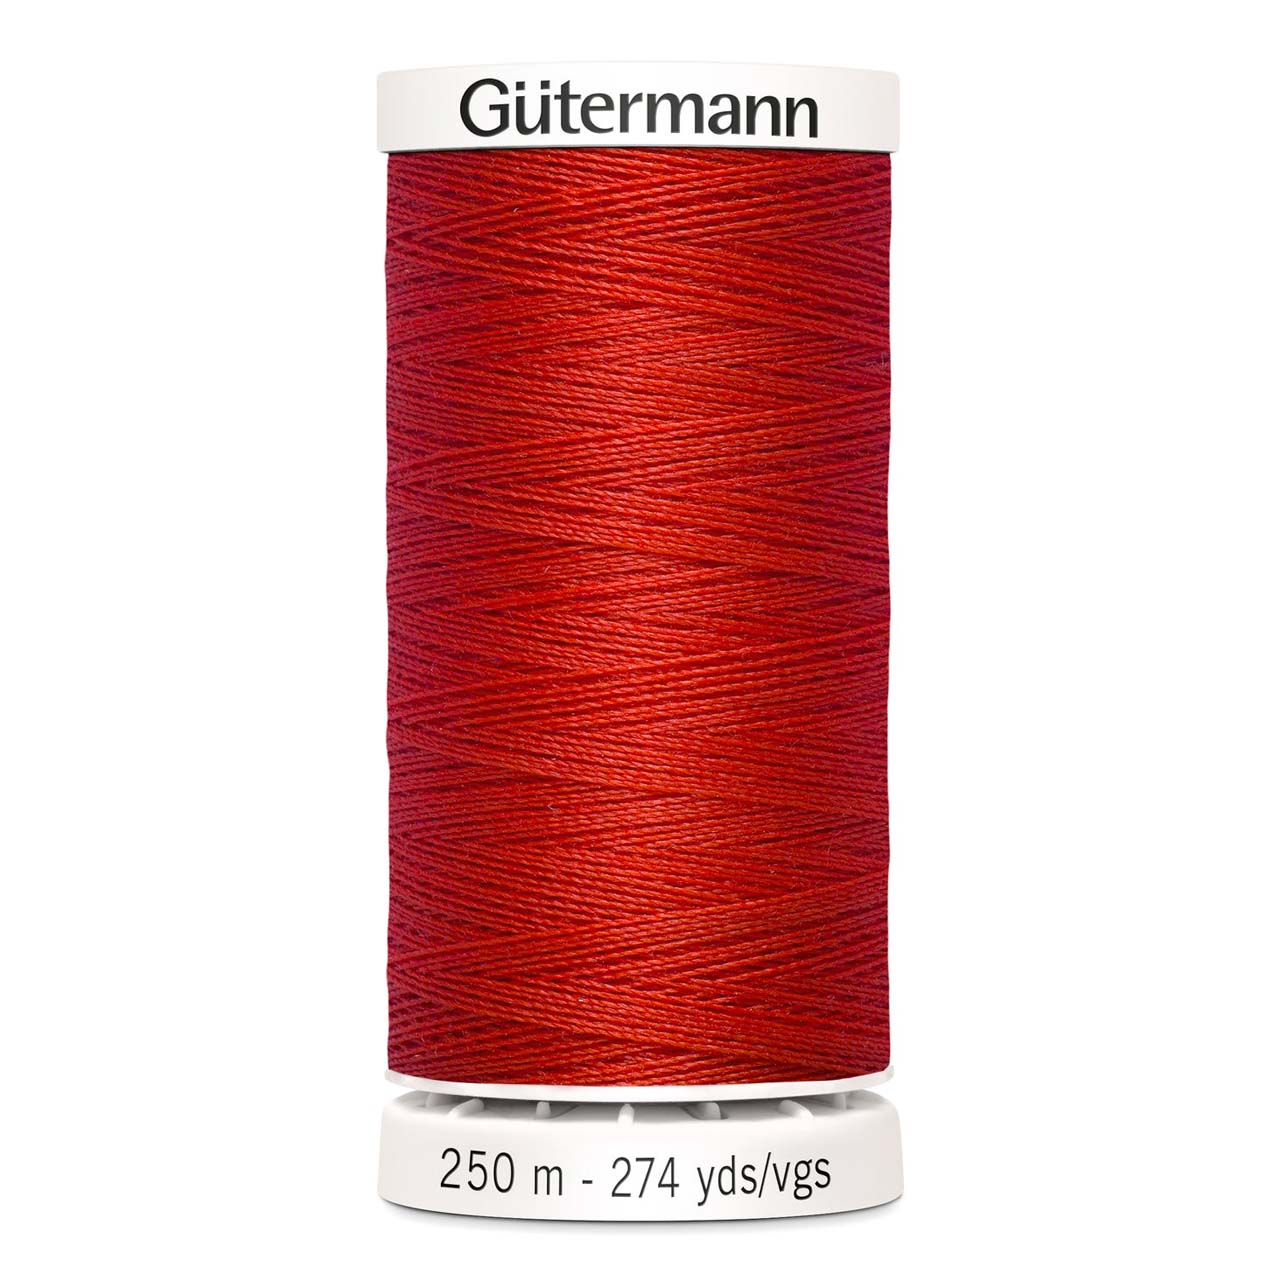 Gutermann thread 364 sewing thread 250 metres